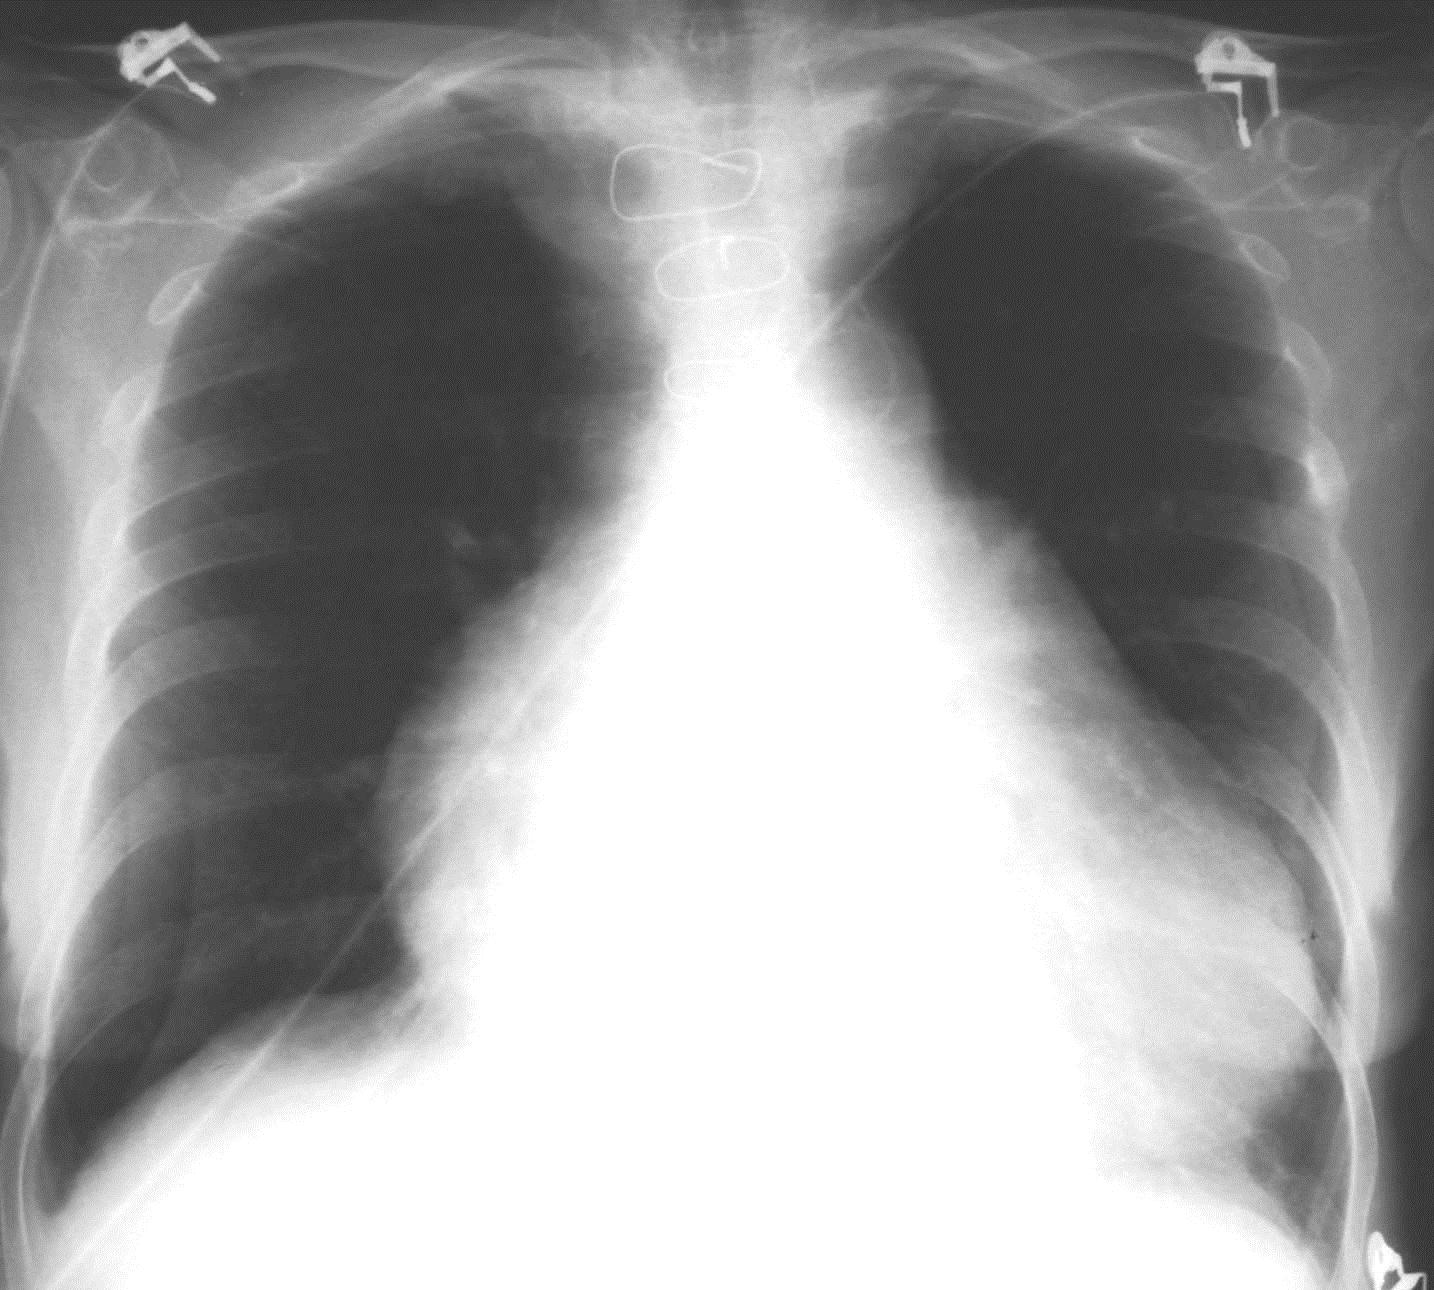 Bilateral pneumothorax er